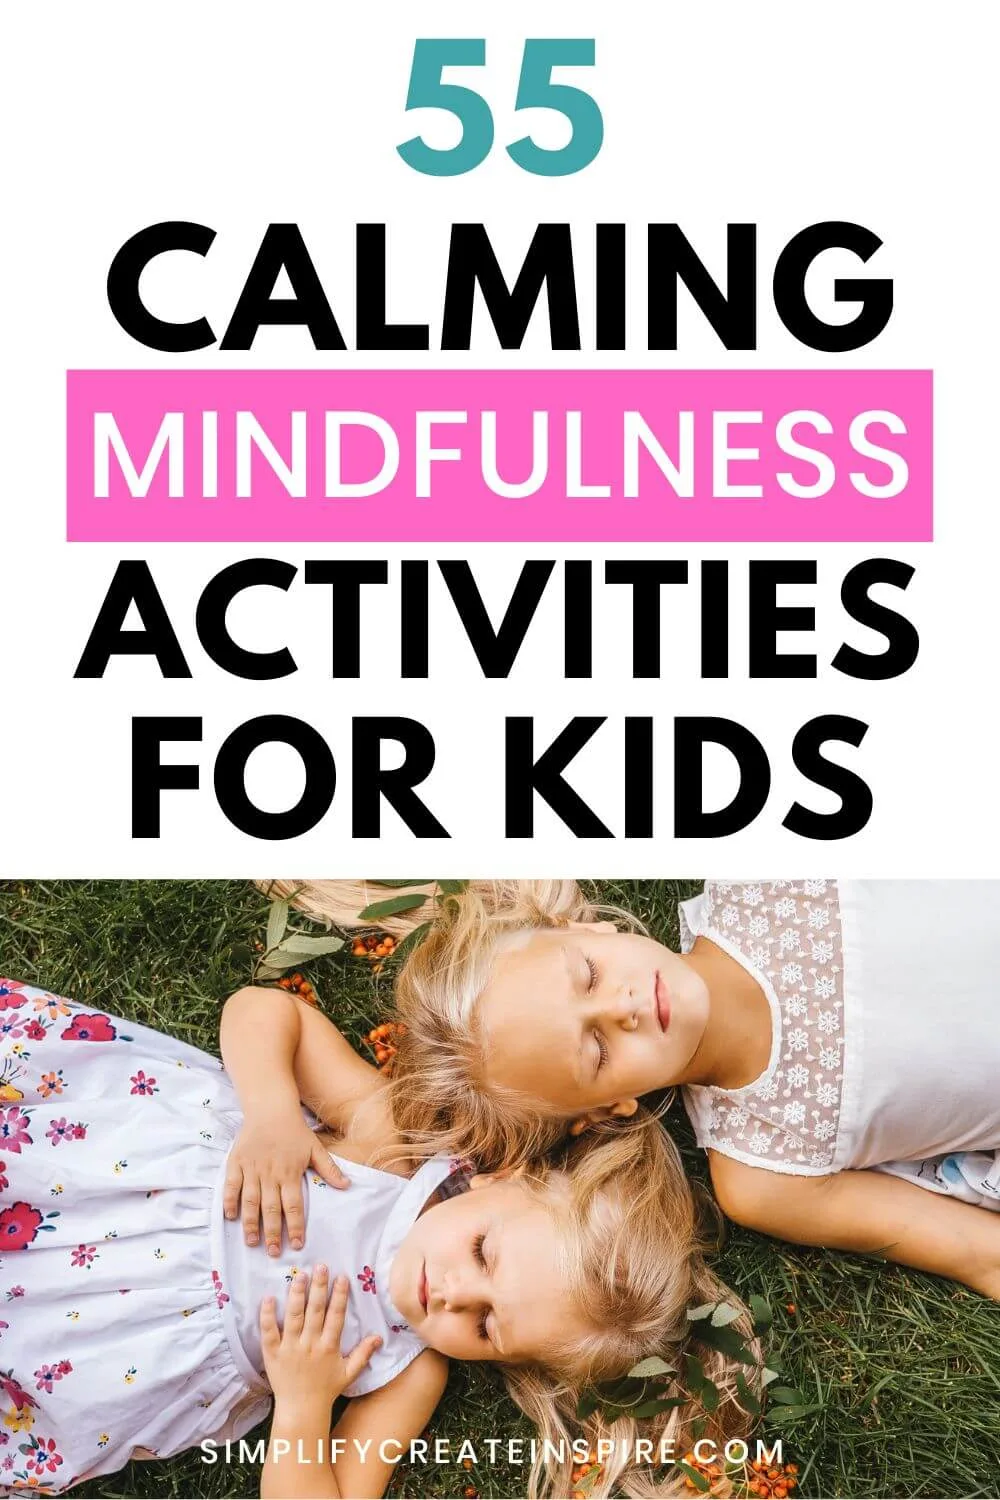 55 calming mindfulness activities for kids